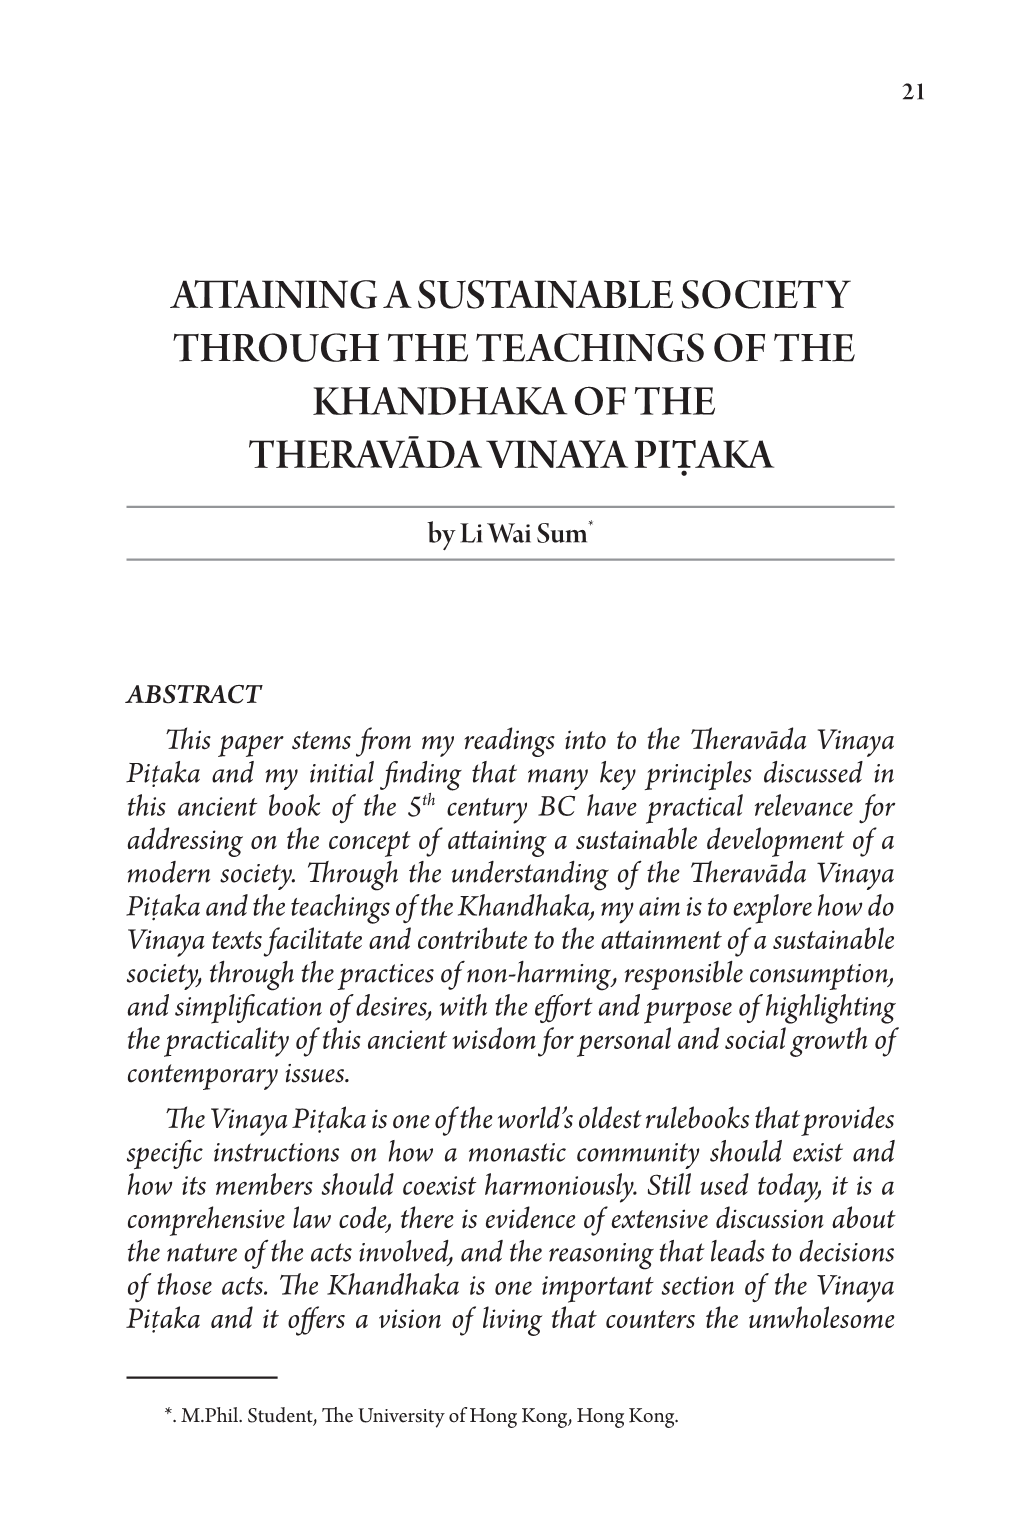 Attaining a Sustainable Society Through the Teachings of the Khandhaka of the Theravāda Vinaya Piṭaka